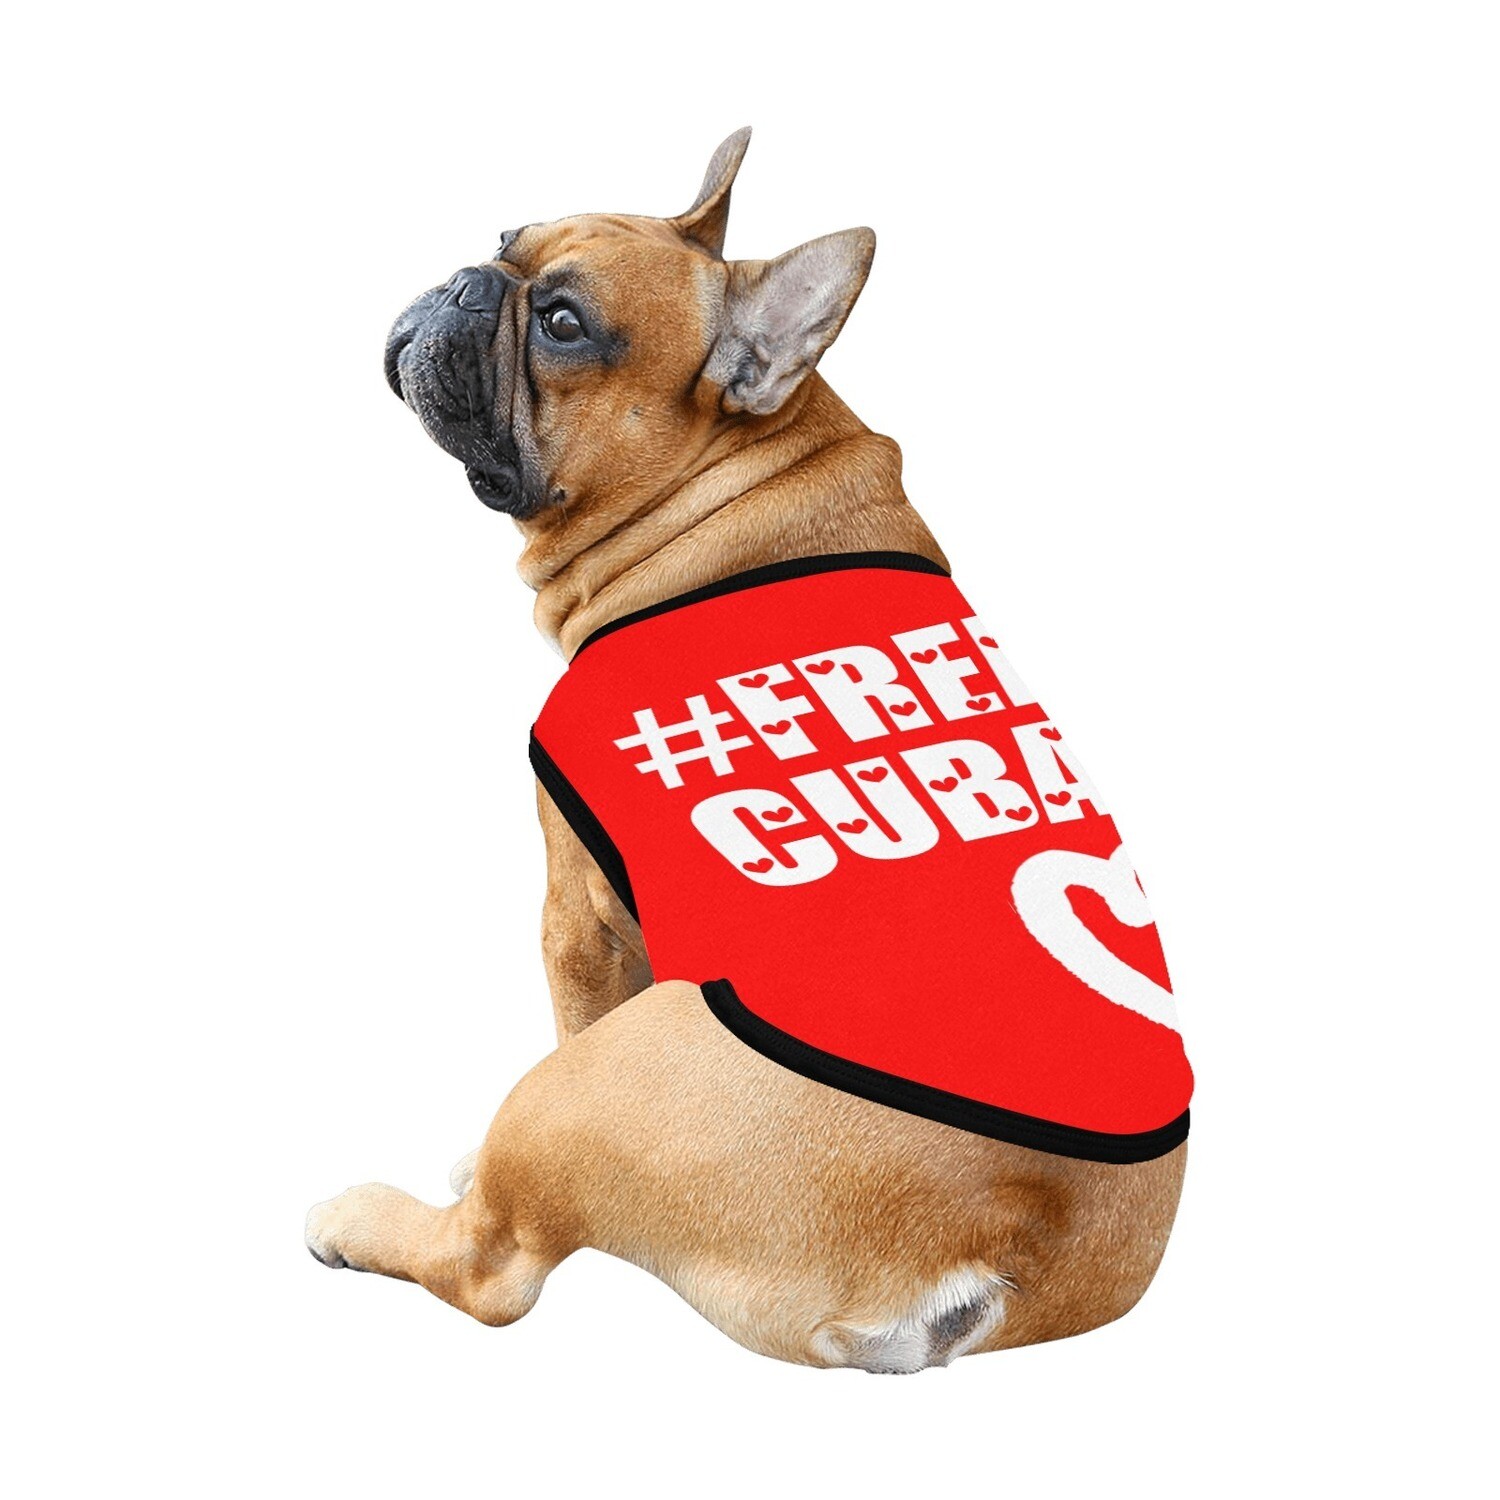 🐕🇨🇺 Free Cuba dog t-shirt, dog gift, dog tank top, dog shirt, dog clothes, gift, 7 sizes XS to 3XL, #freecuba, red